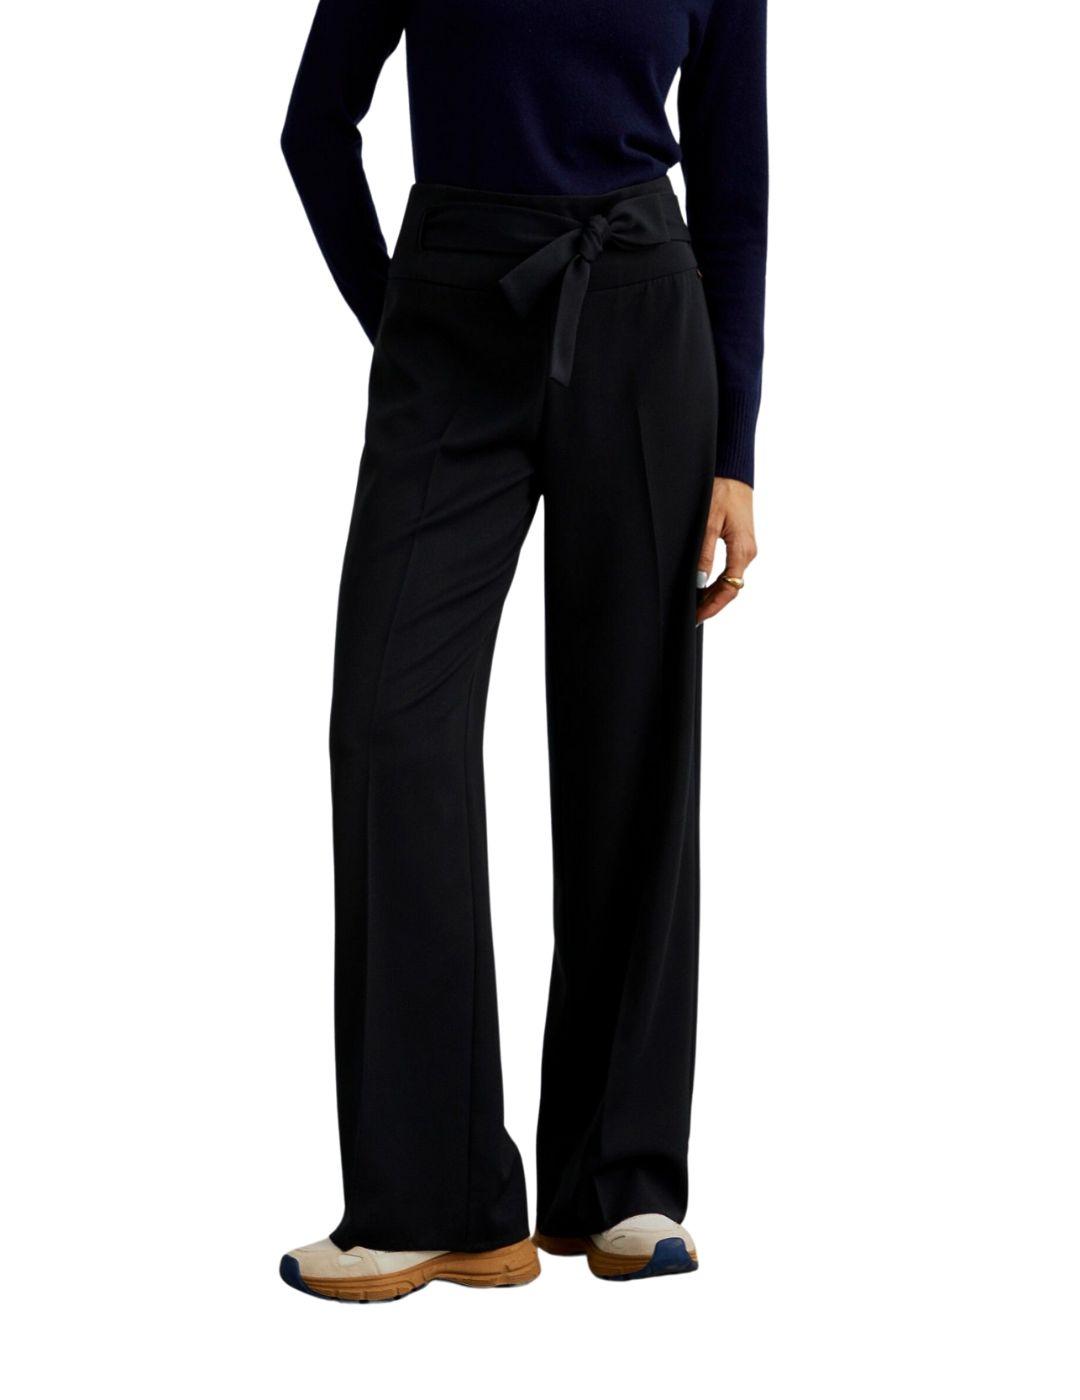 Sudadera Calvin Klein de felpa de algodón con cuello redondo